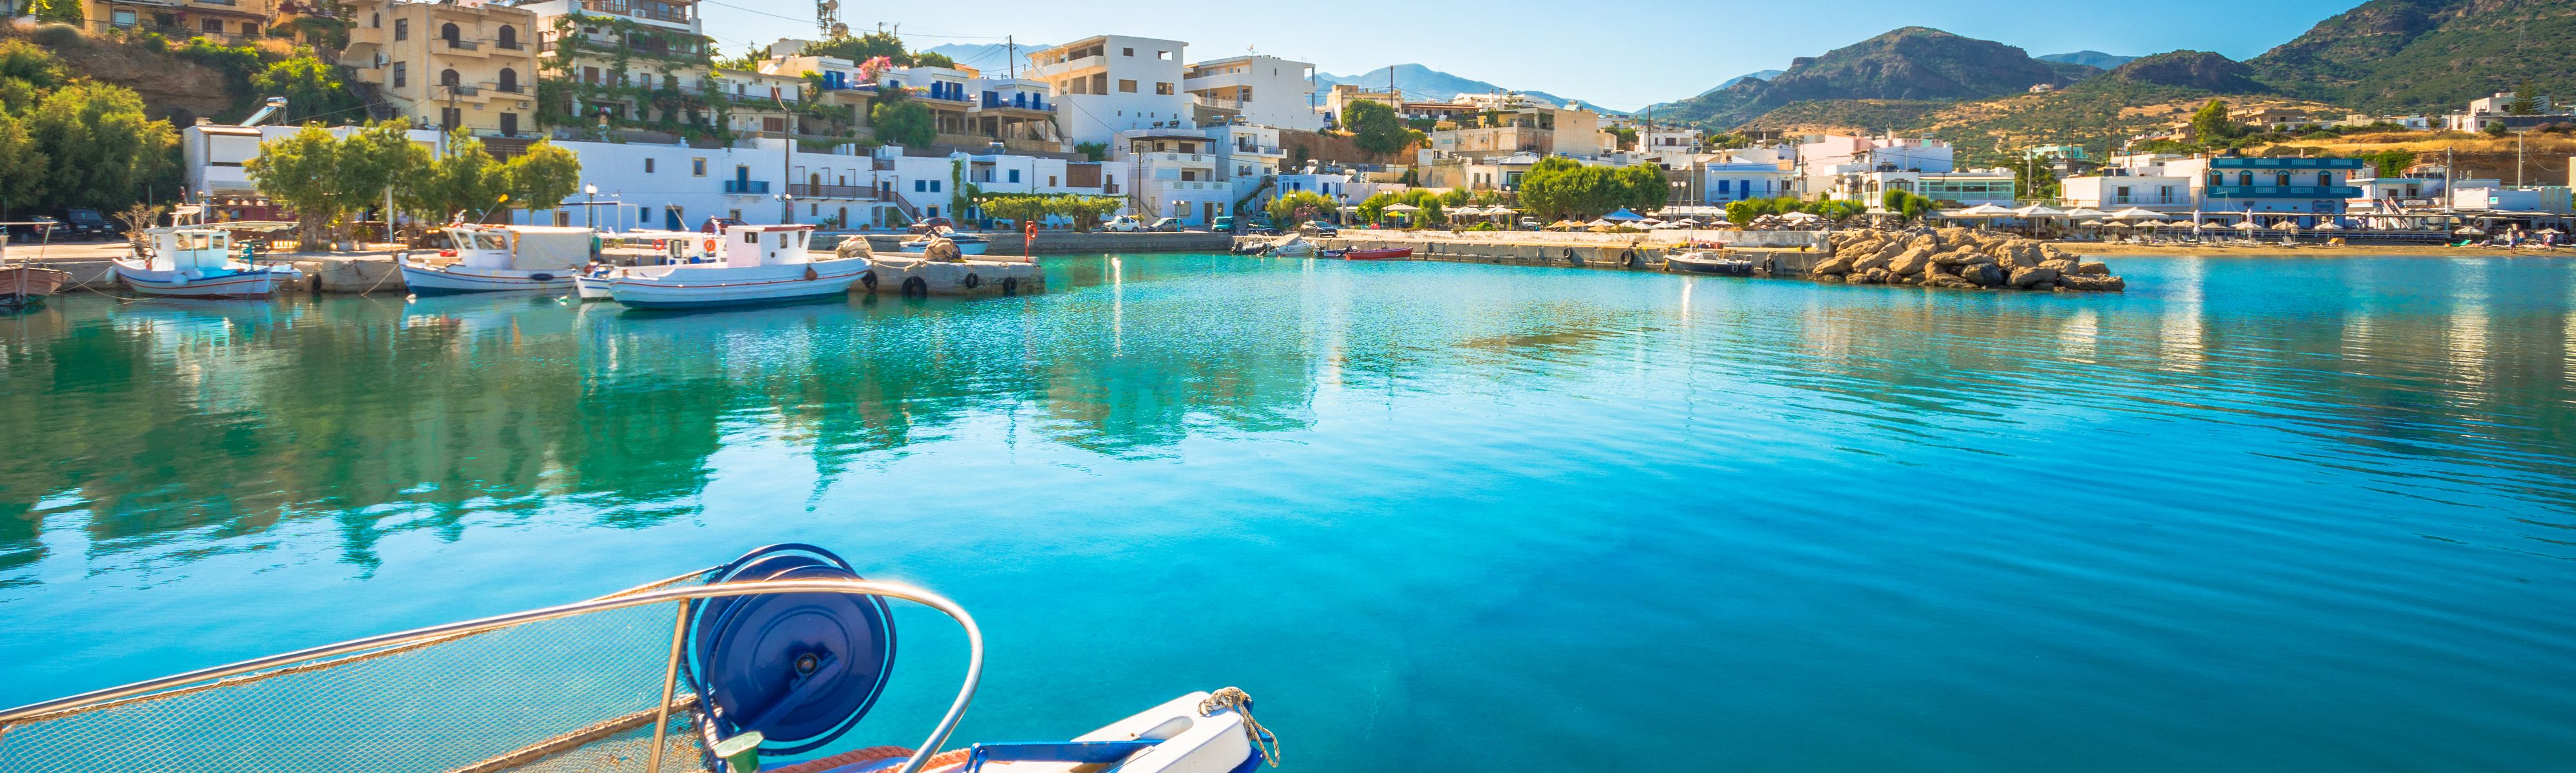 boats in a marina in crete greece